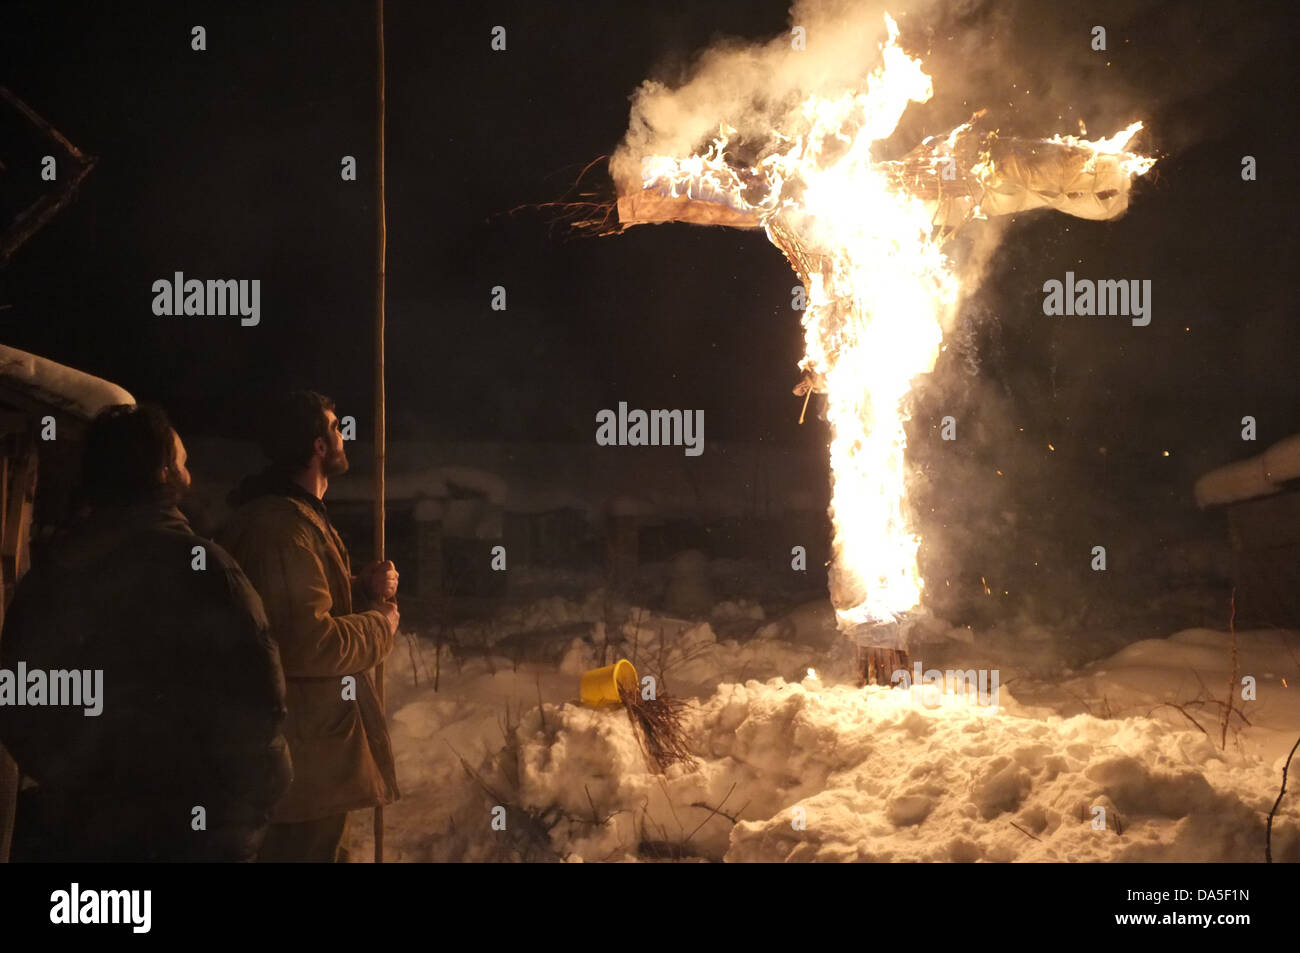 Burning down winter doll during Russian Maslenitsa celebration. Maslenitsa festival separates winter and spring. Stock Photo